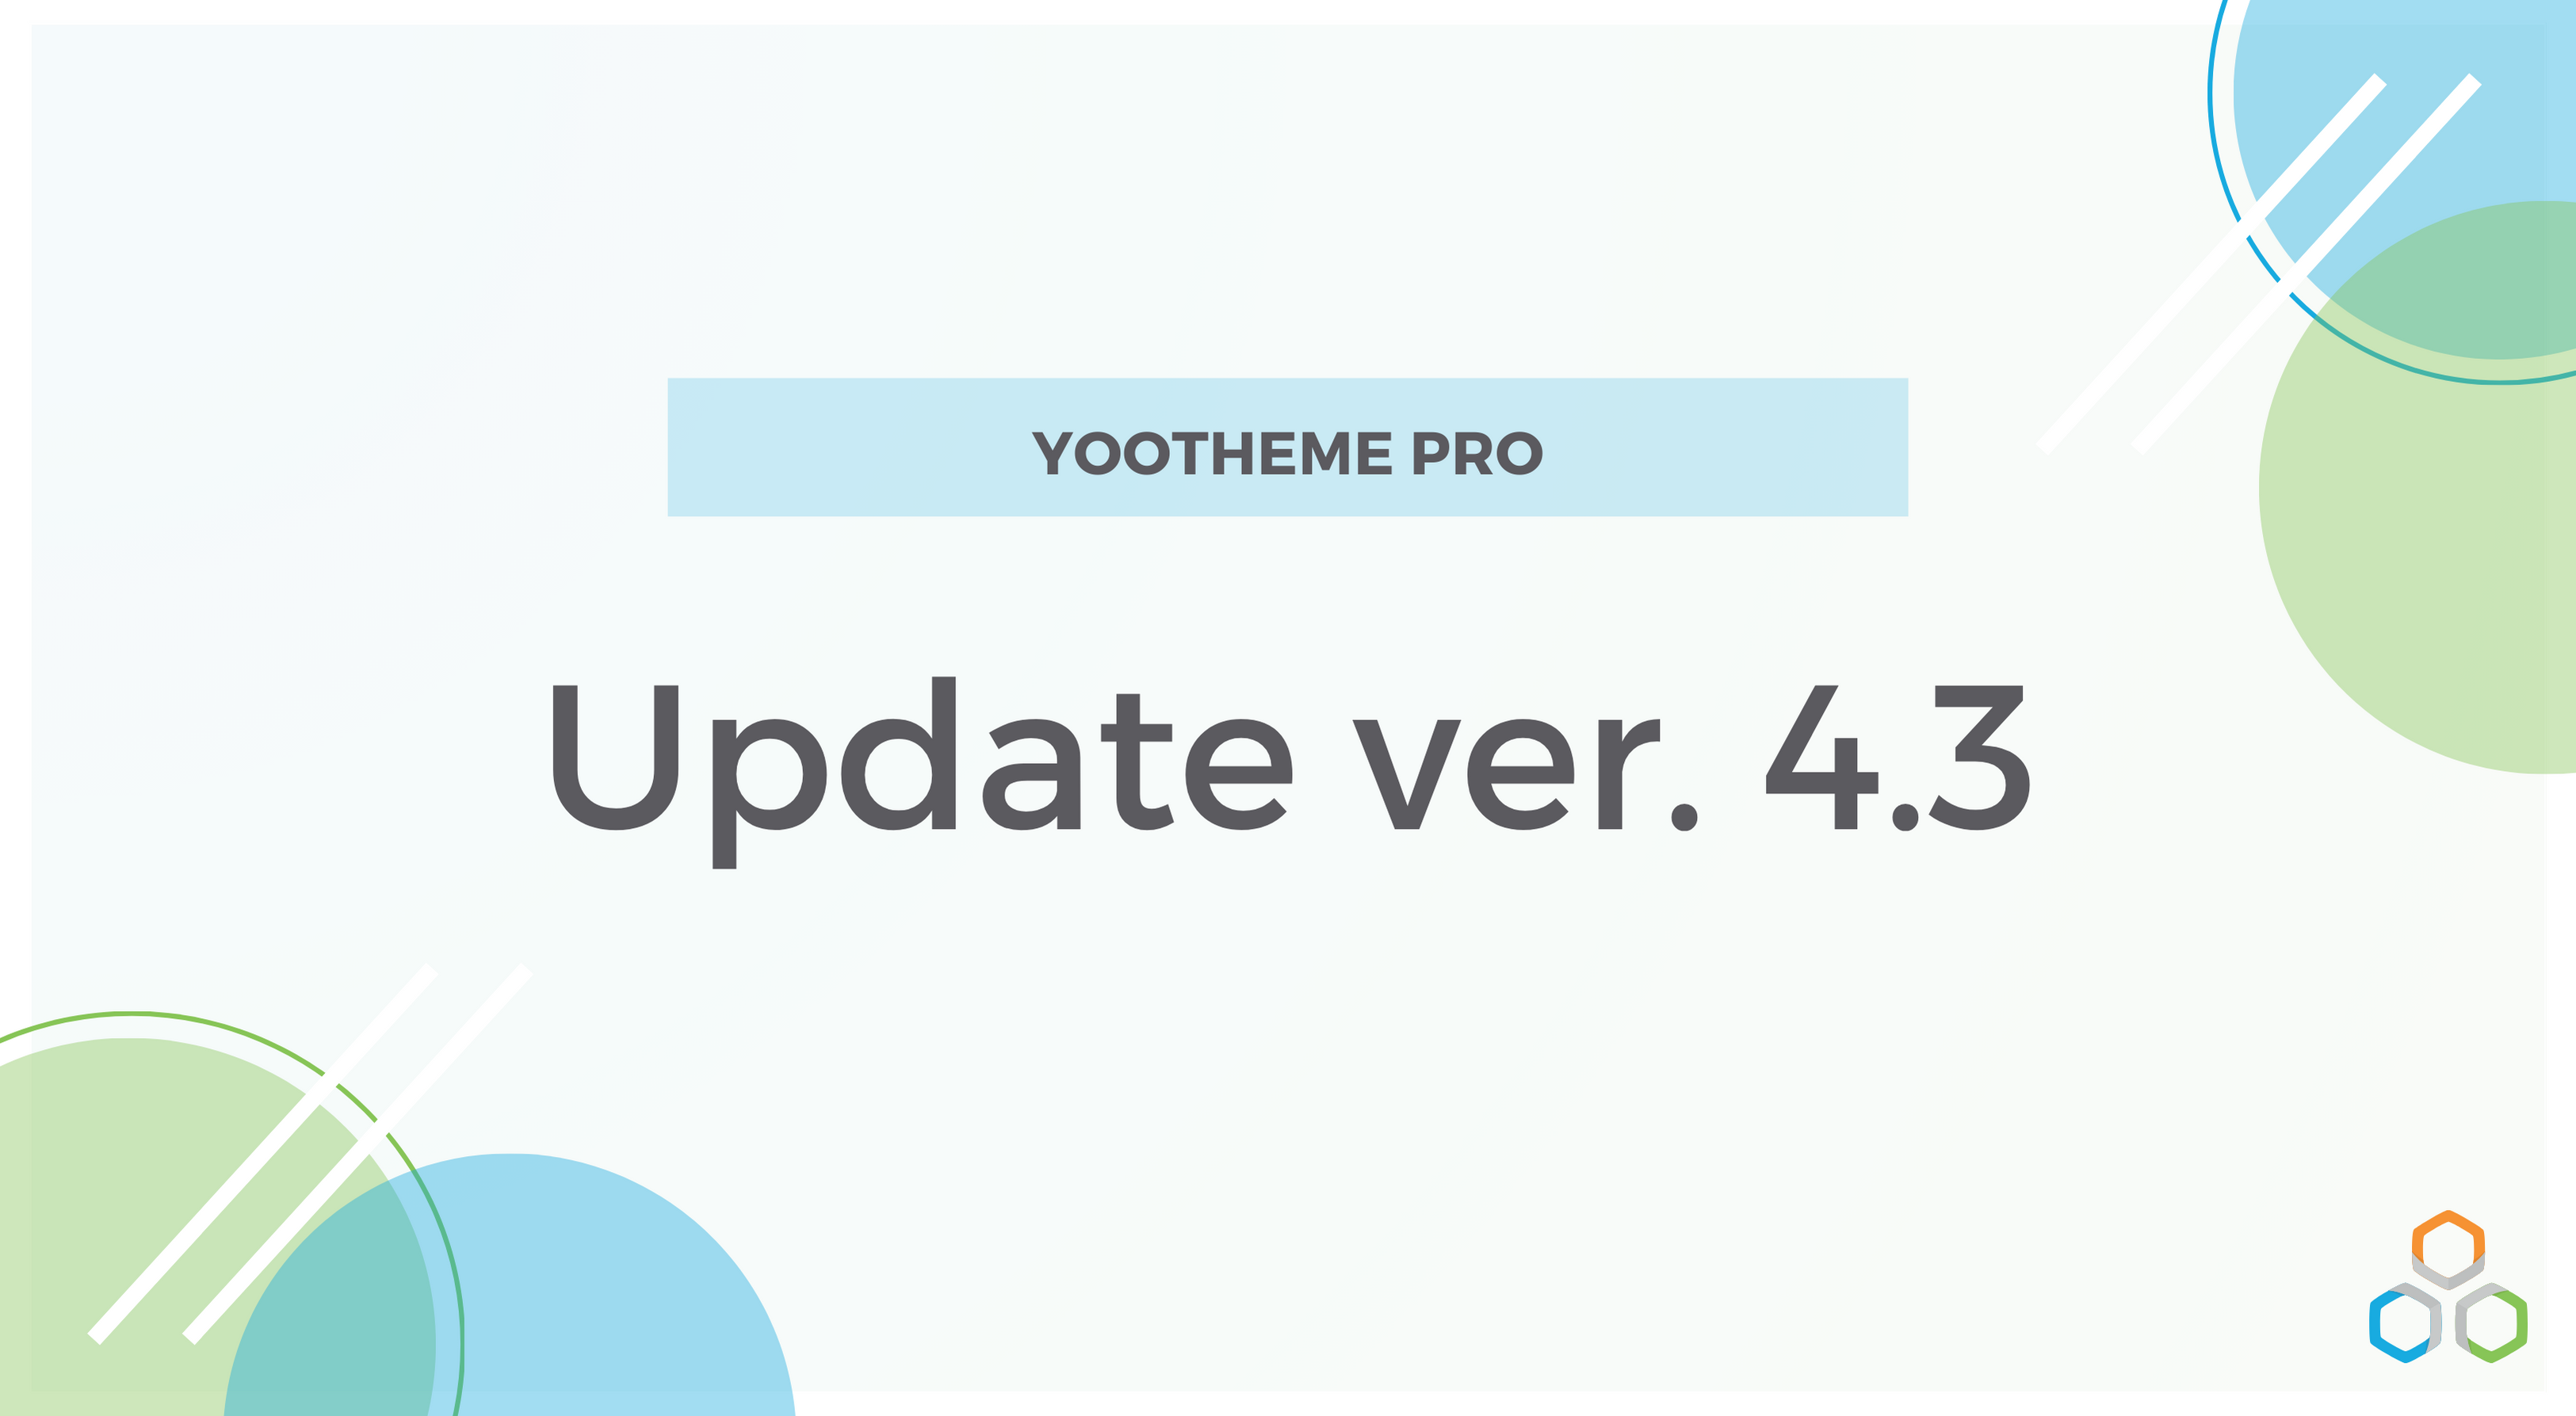 YOOtheme Pro 4.3 update